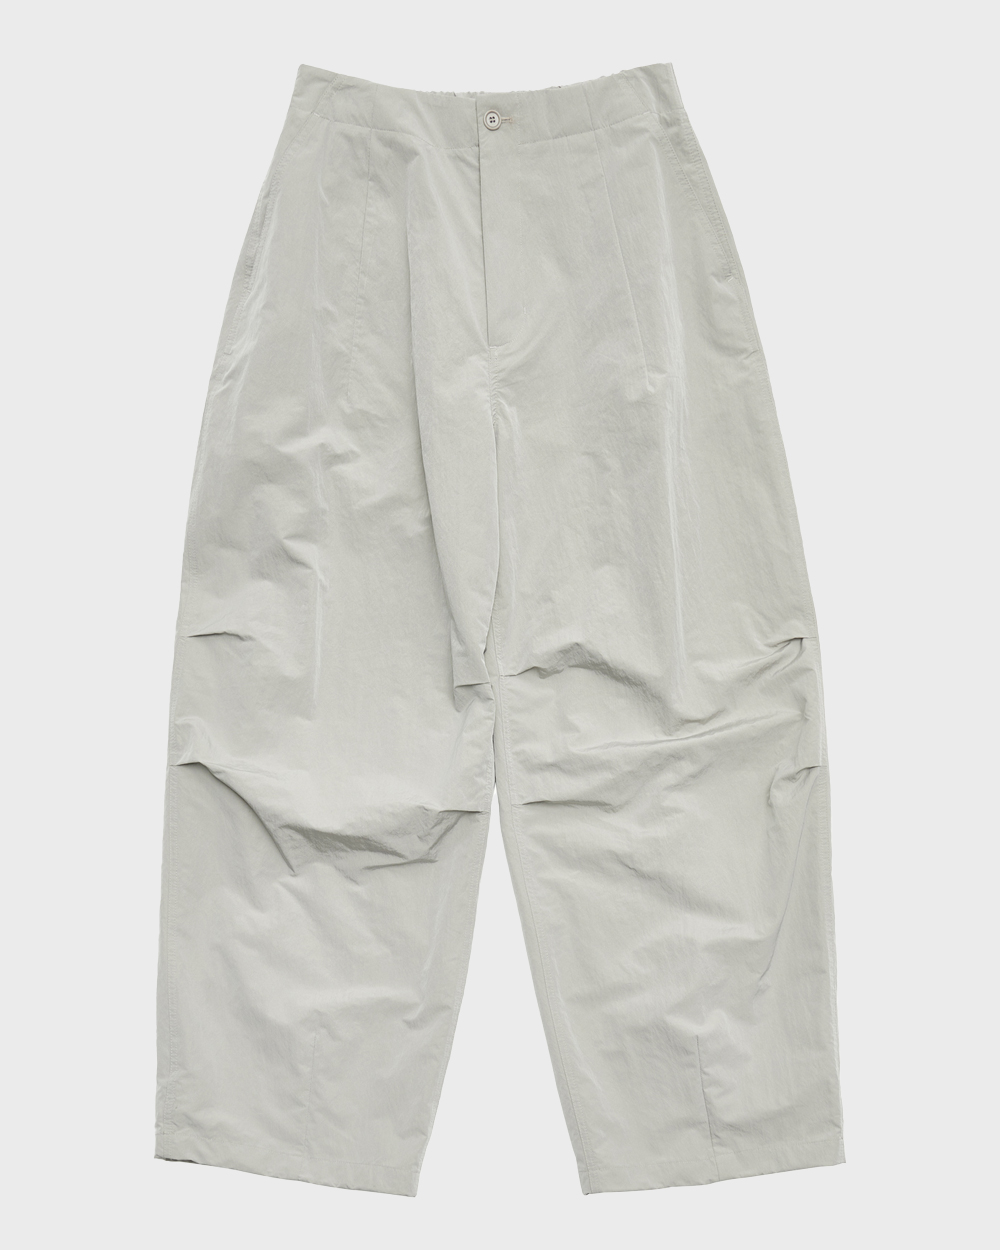 Ripstop Fatigue Pants (Light Grey)